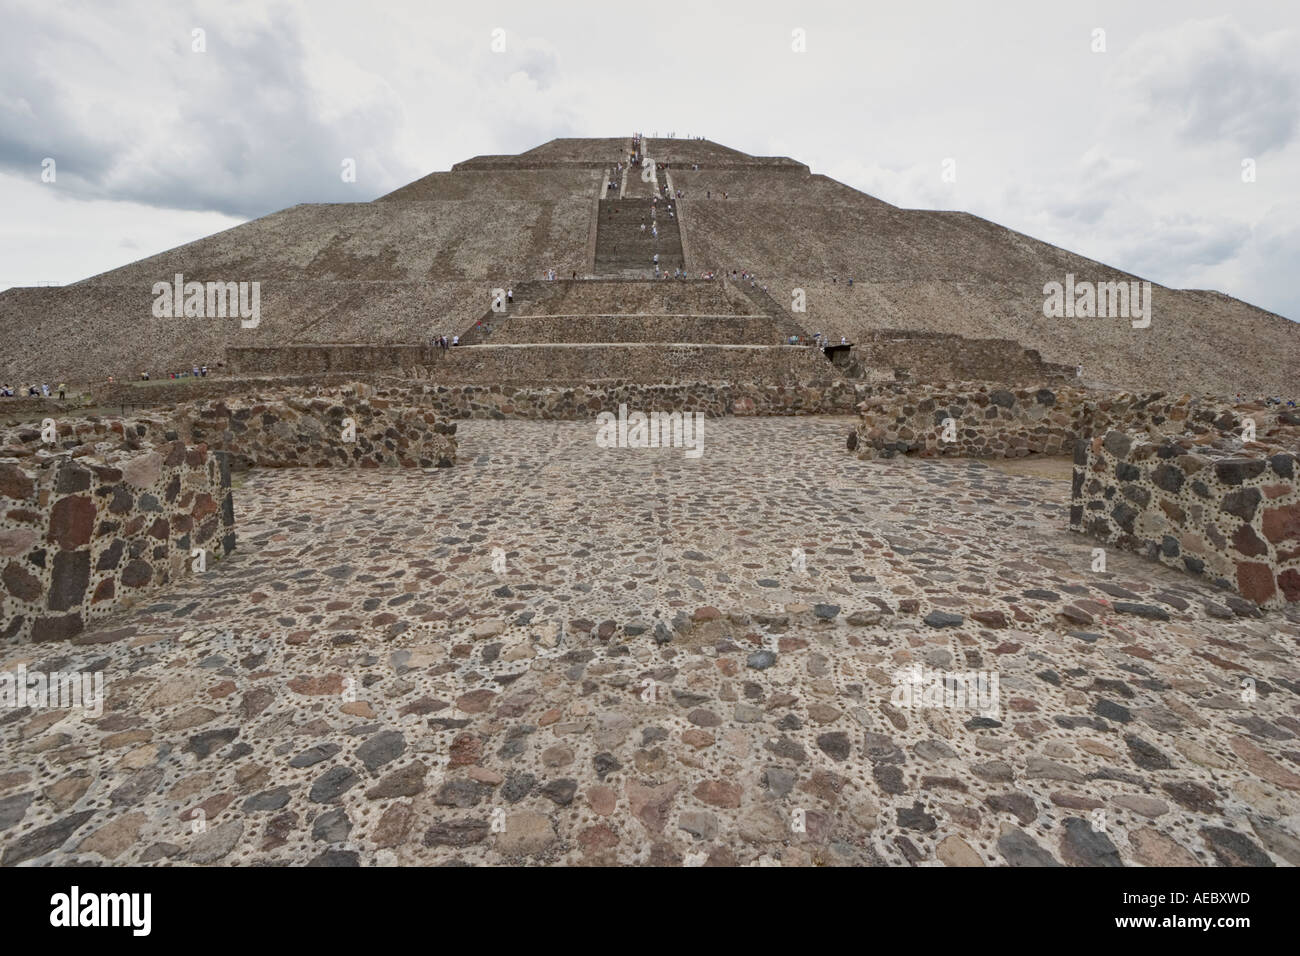 Sonne-Pyramide gesehen aus der Perspektive des Sun Plaza (Mexiko). Pyramide du Soleil Vue Depuis la Plaza del Sol (Mexiko). Stockfoto